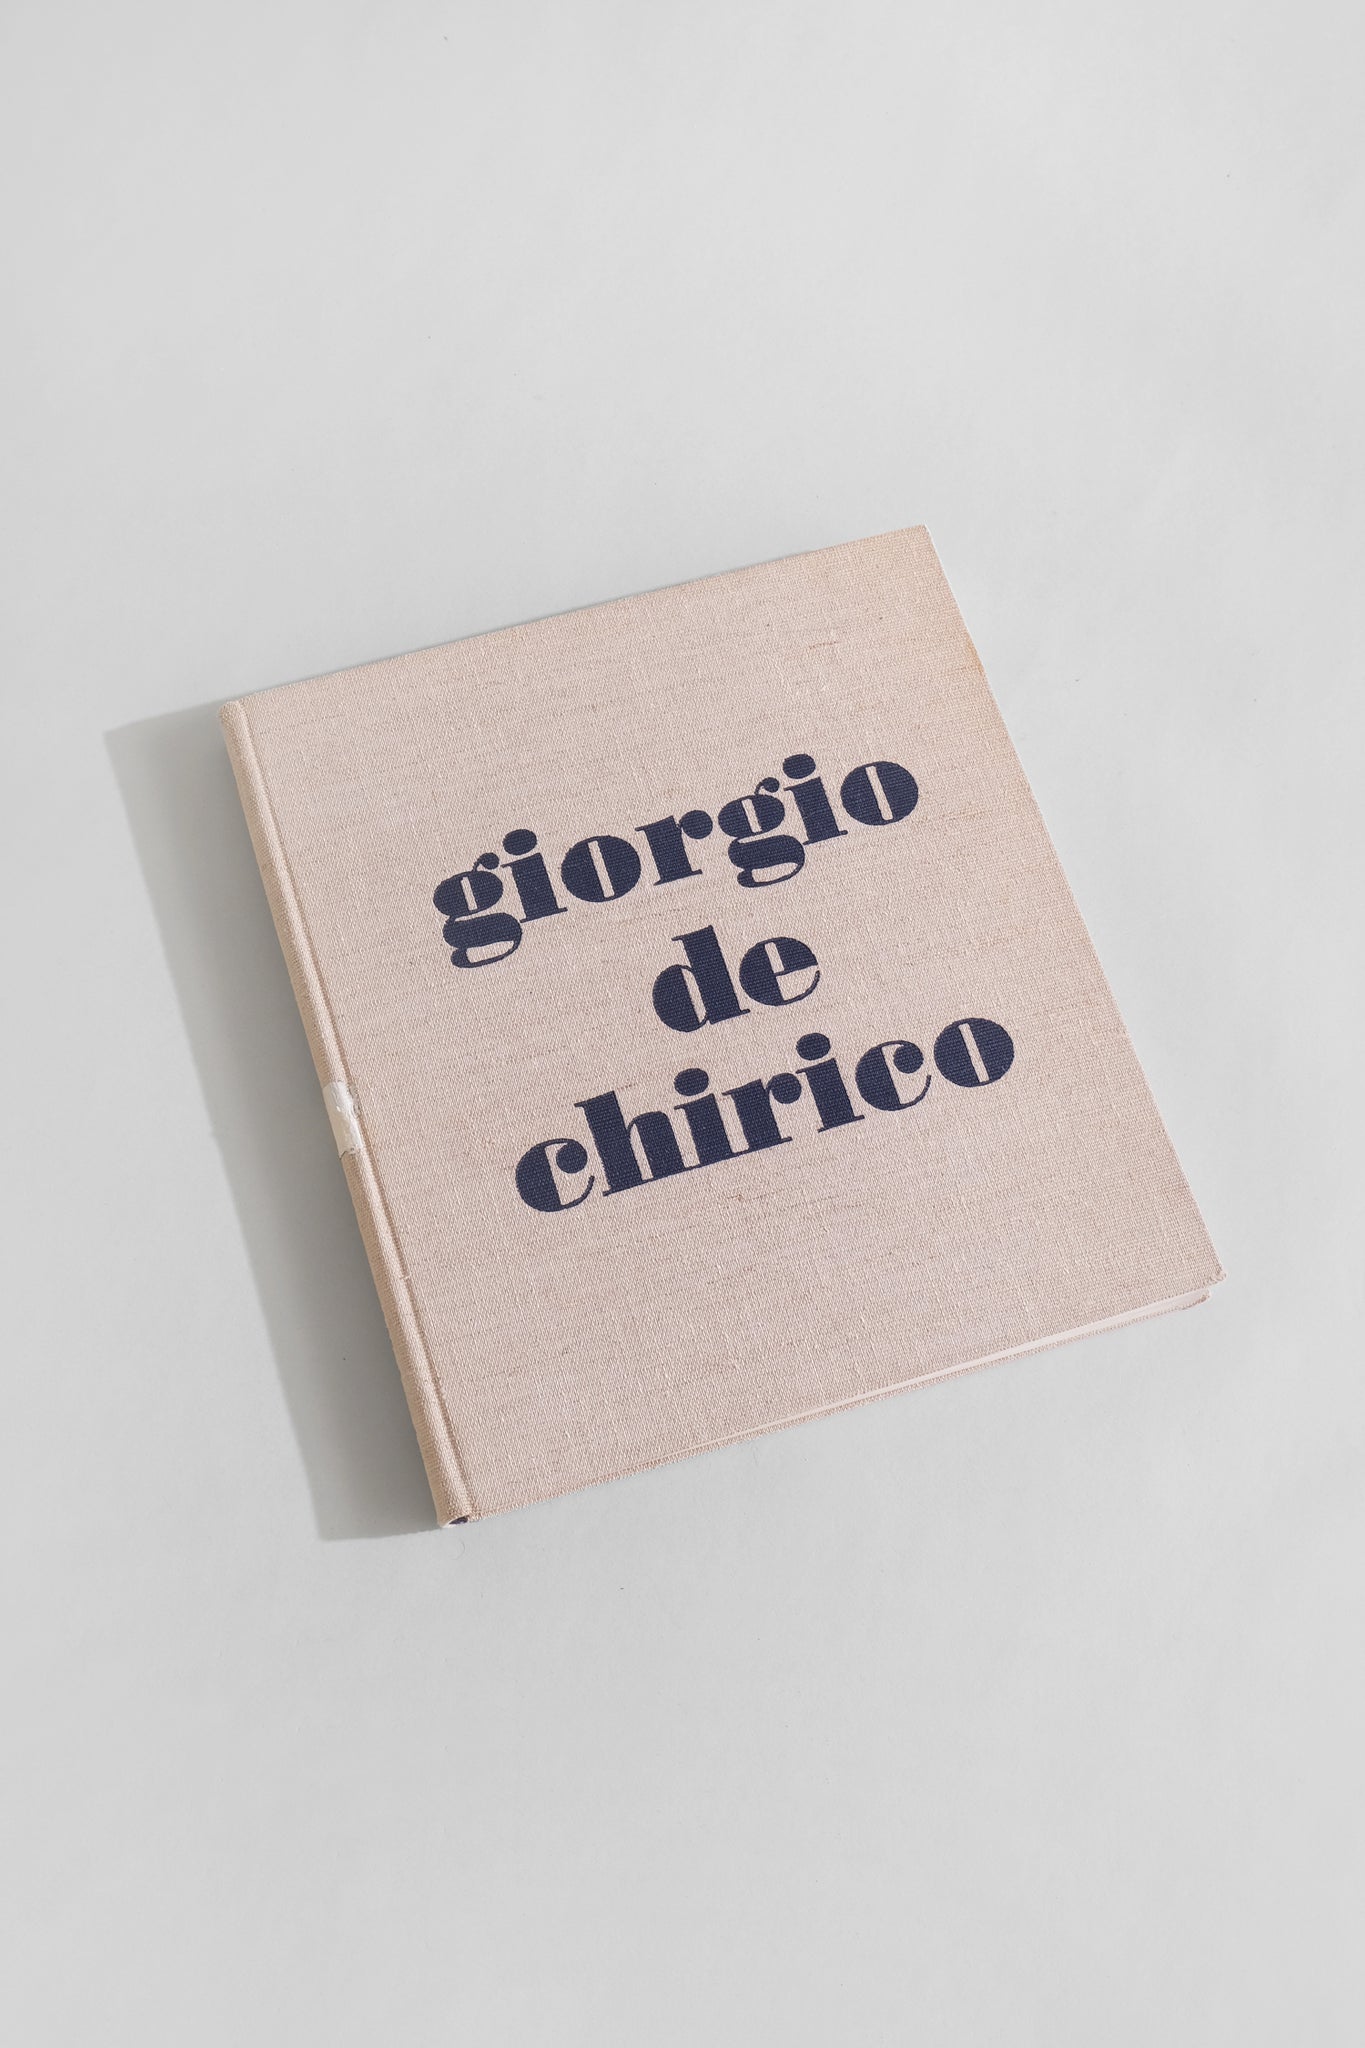 Giorgio de Chirico Book